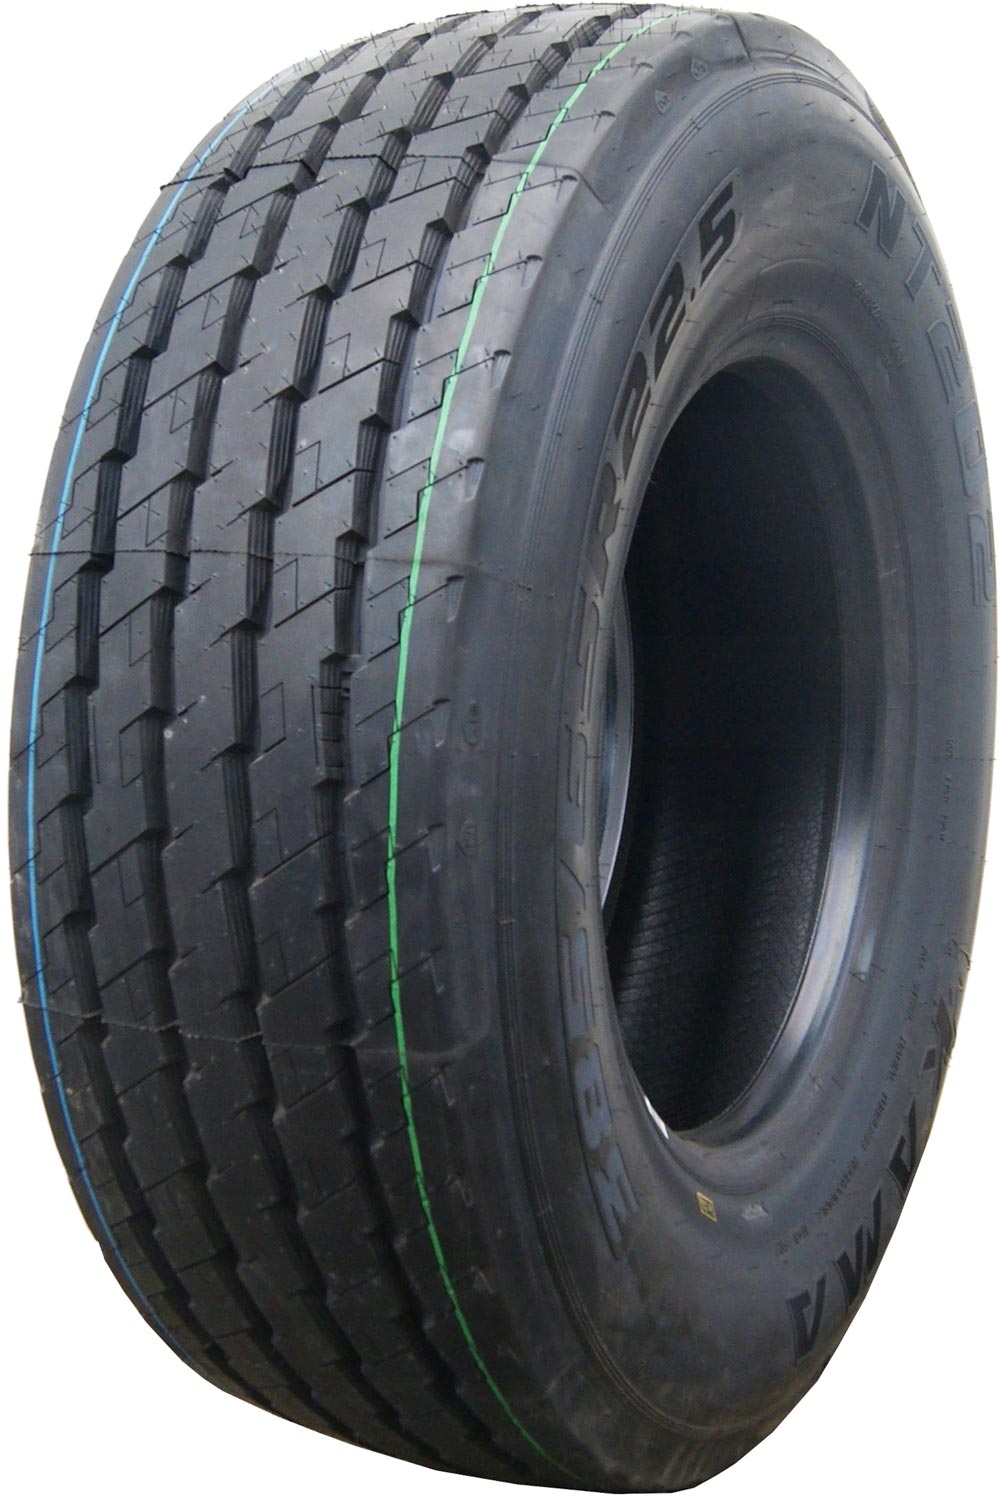 product_type-heavy_tires KAMA NT202 235/75 R17.5 143J